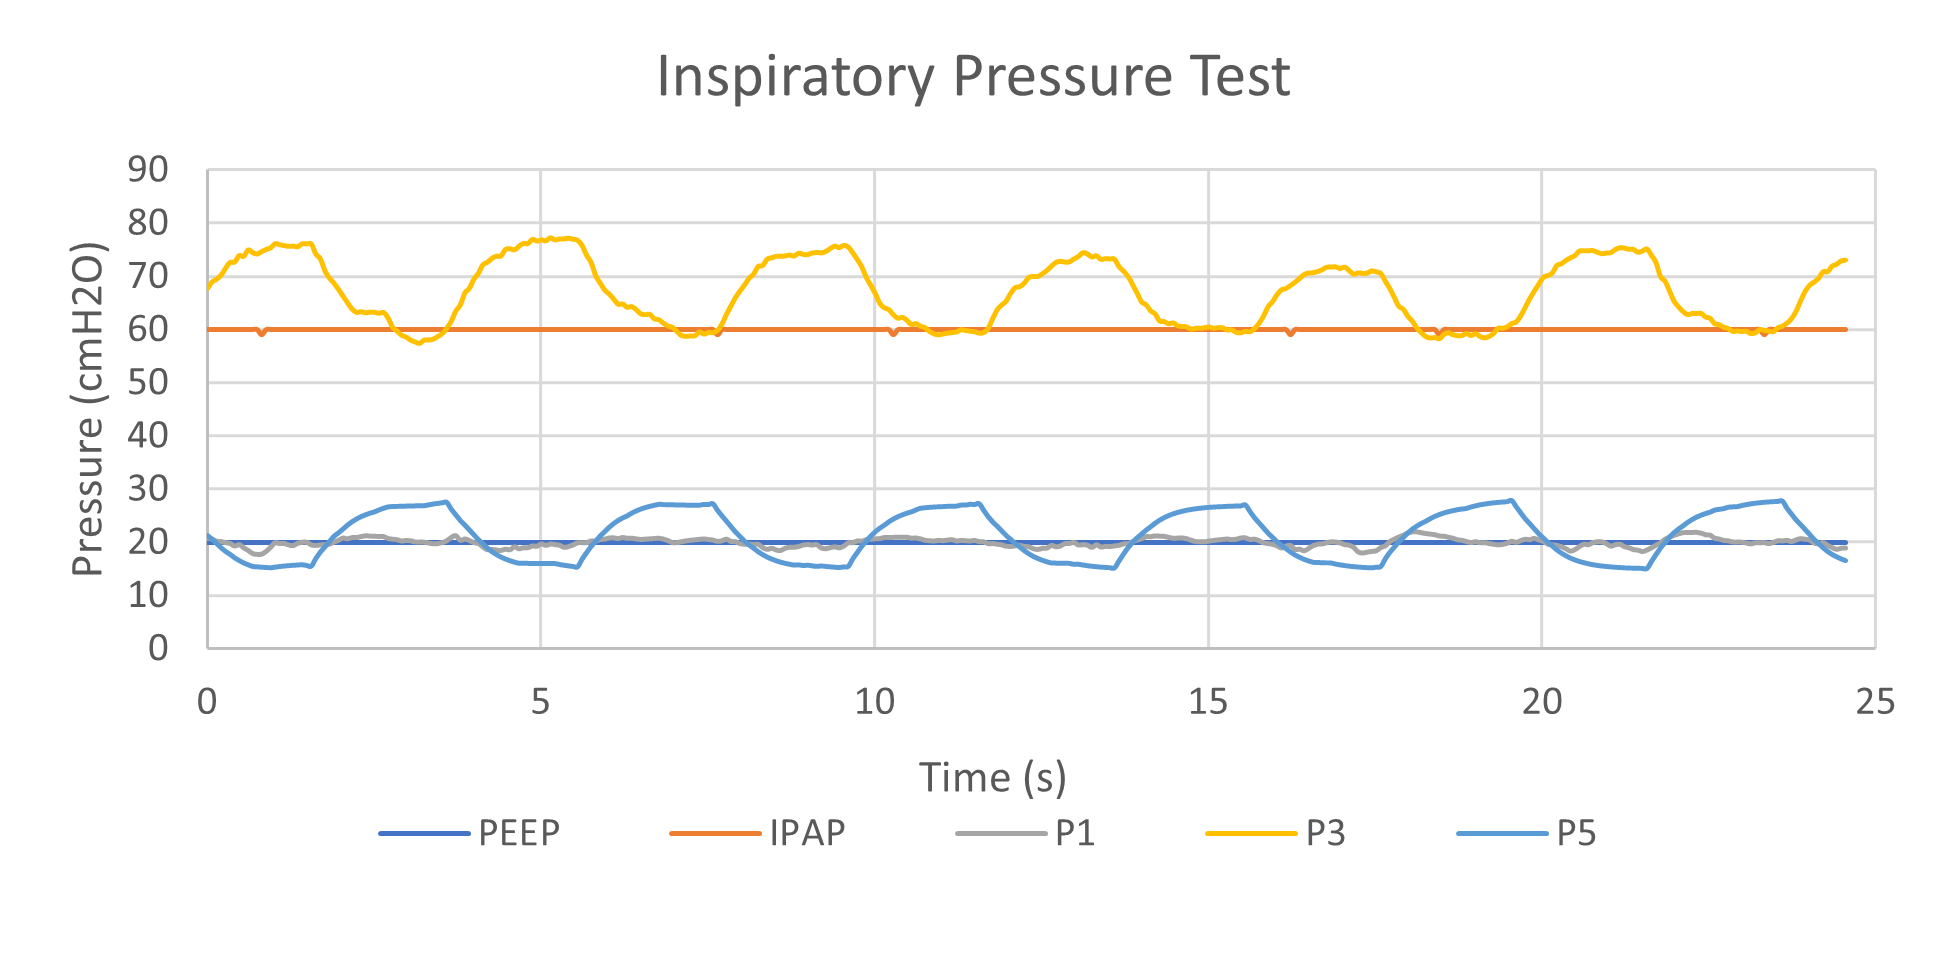 Figure 7: Inspiratory Pressure Test